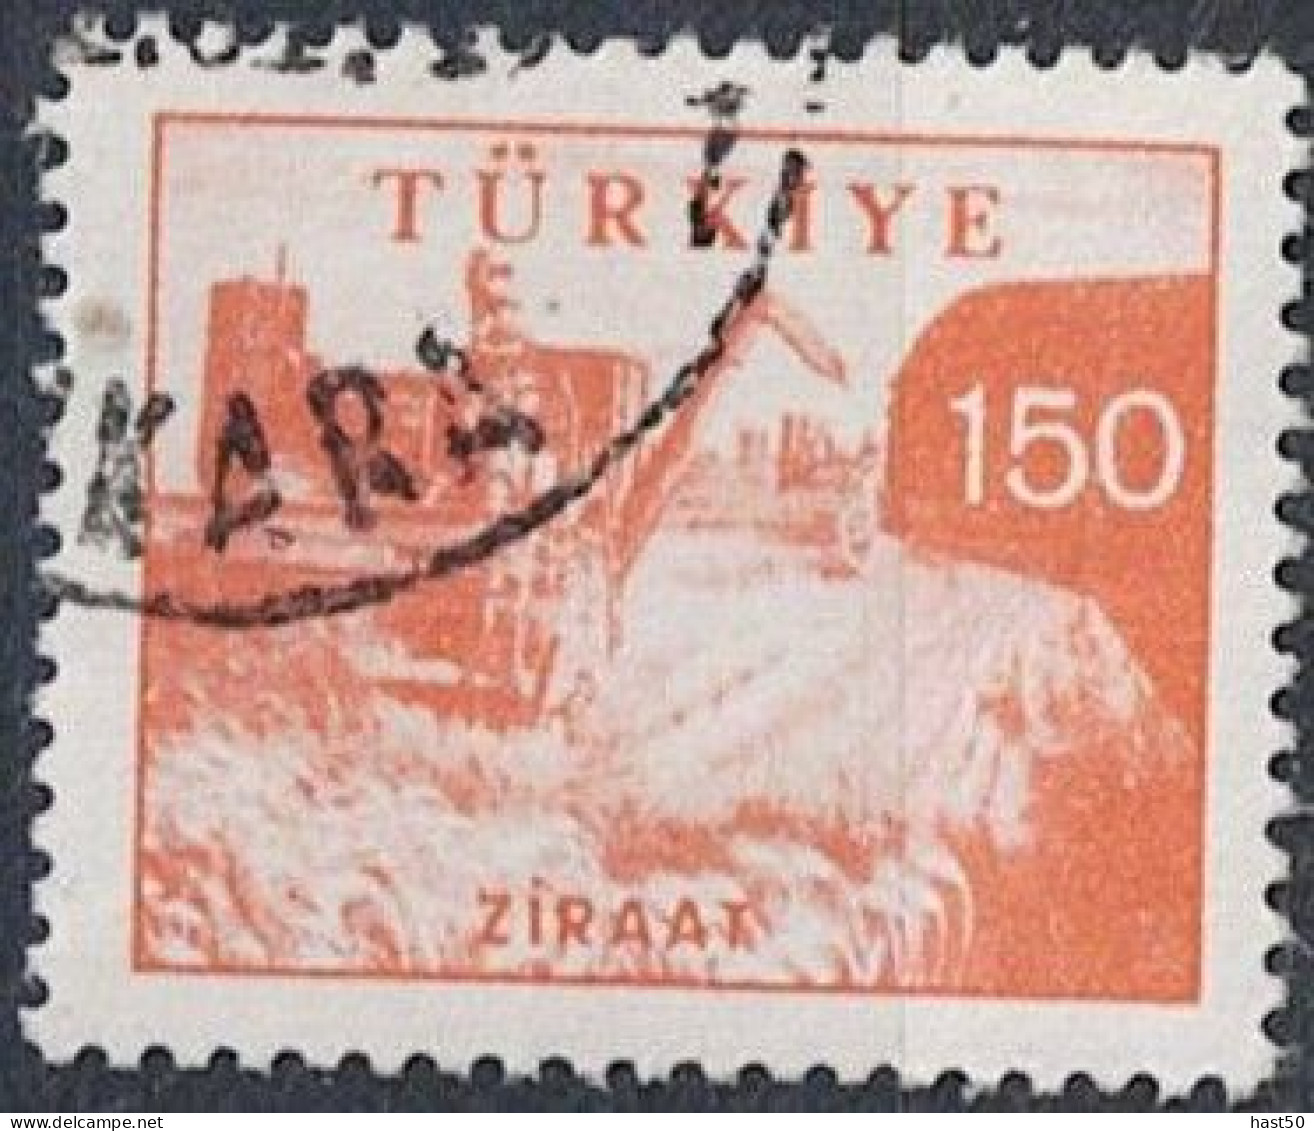 Türkei Turkey Turquie - Mähdrescher (MiNr: 1706) 1960 - Gest Used Obl - Used Stamps